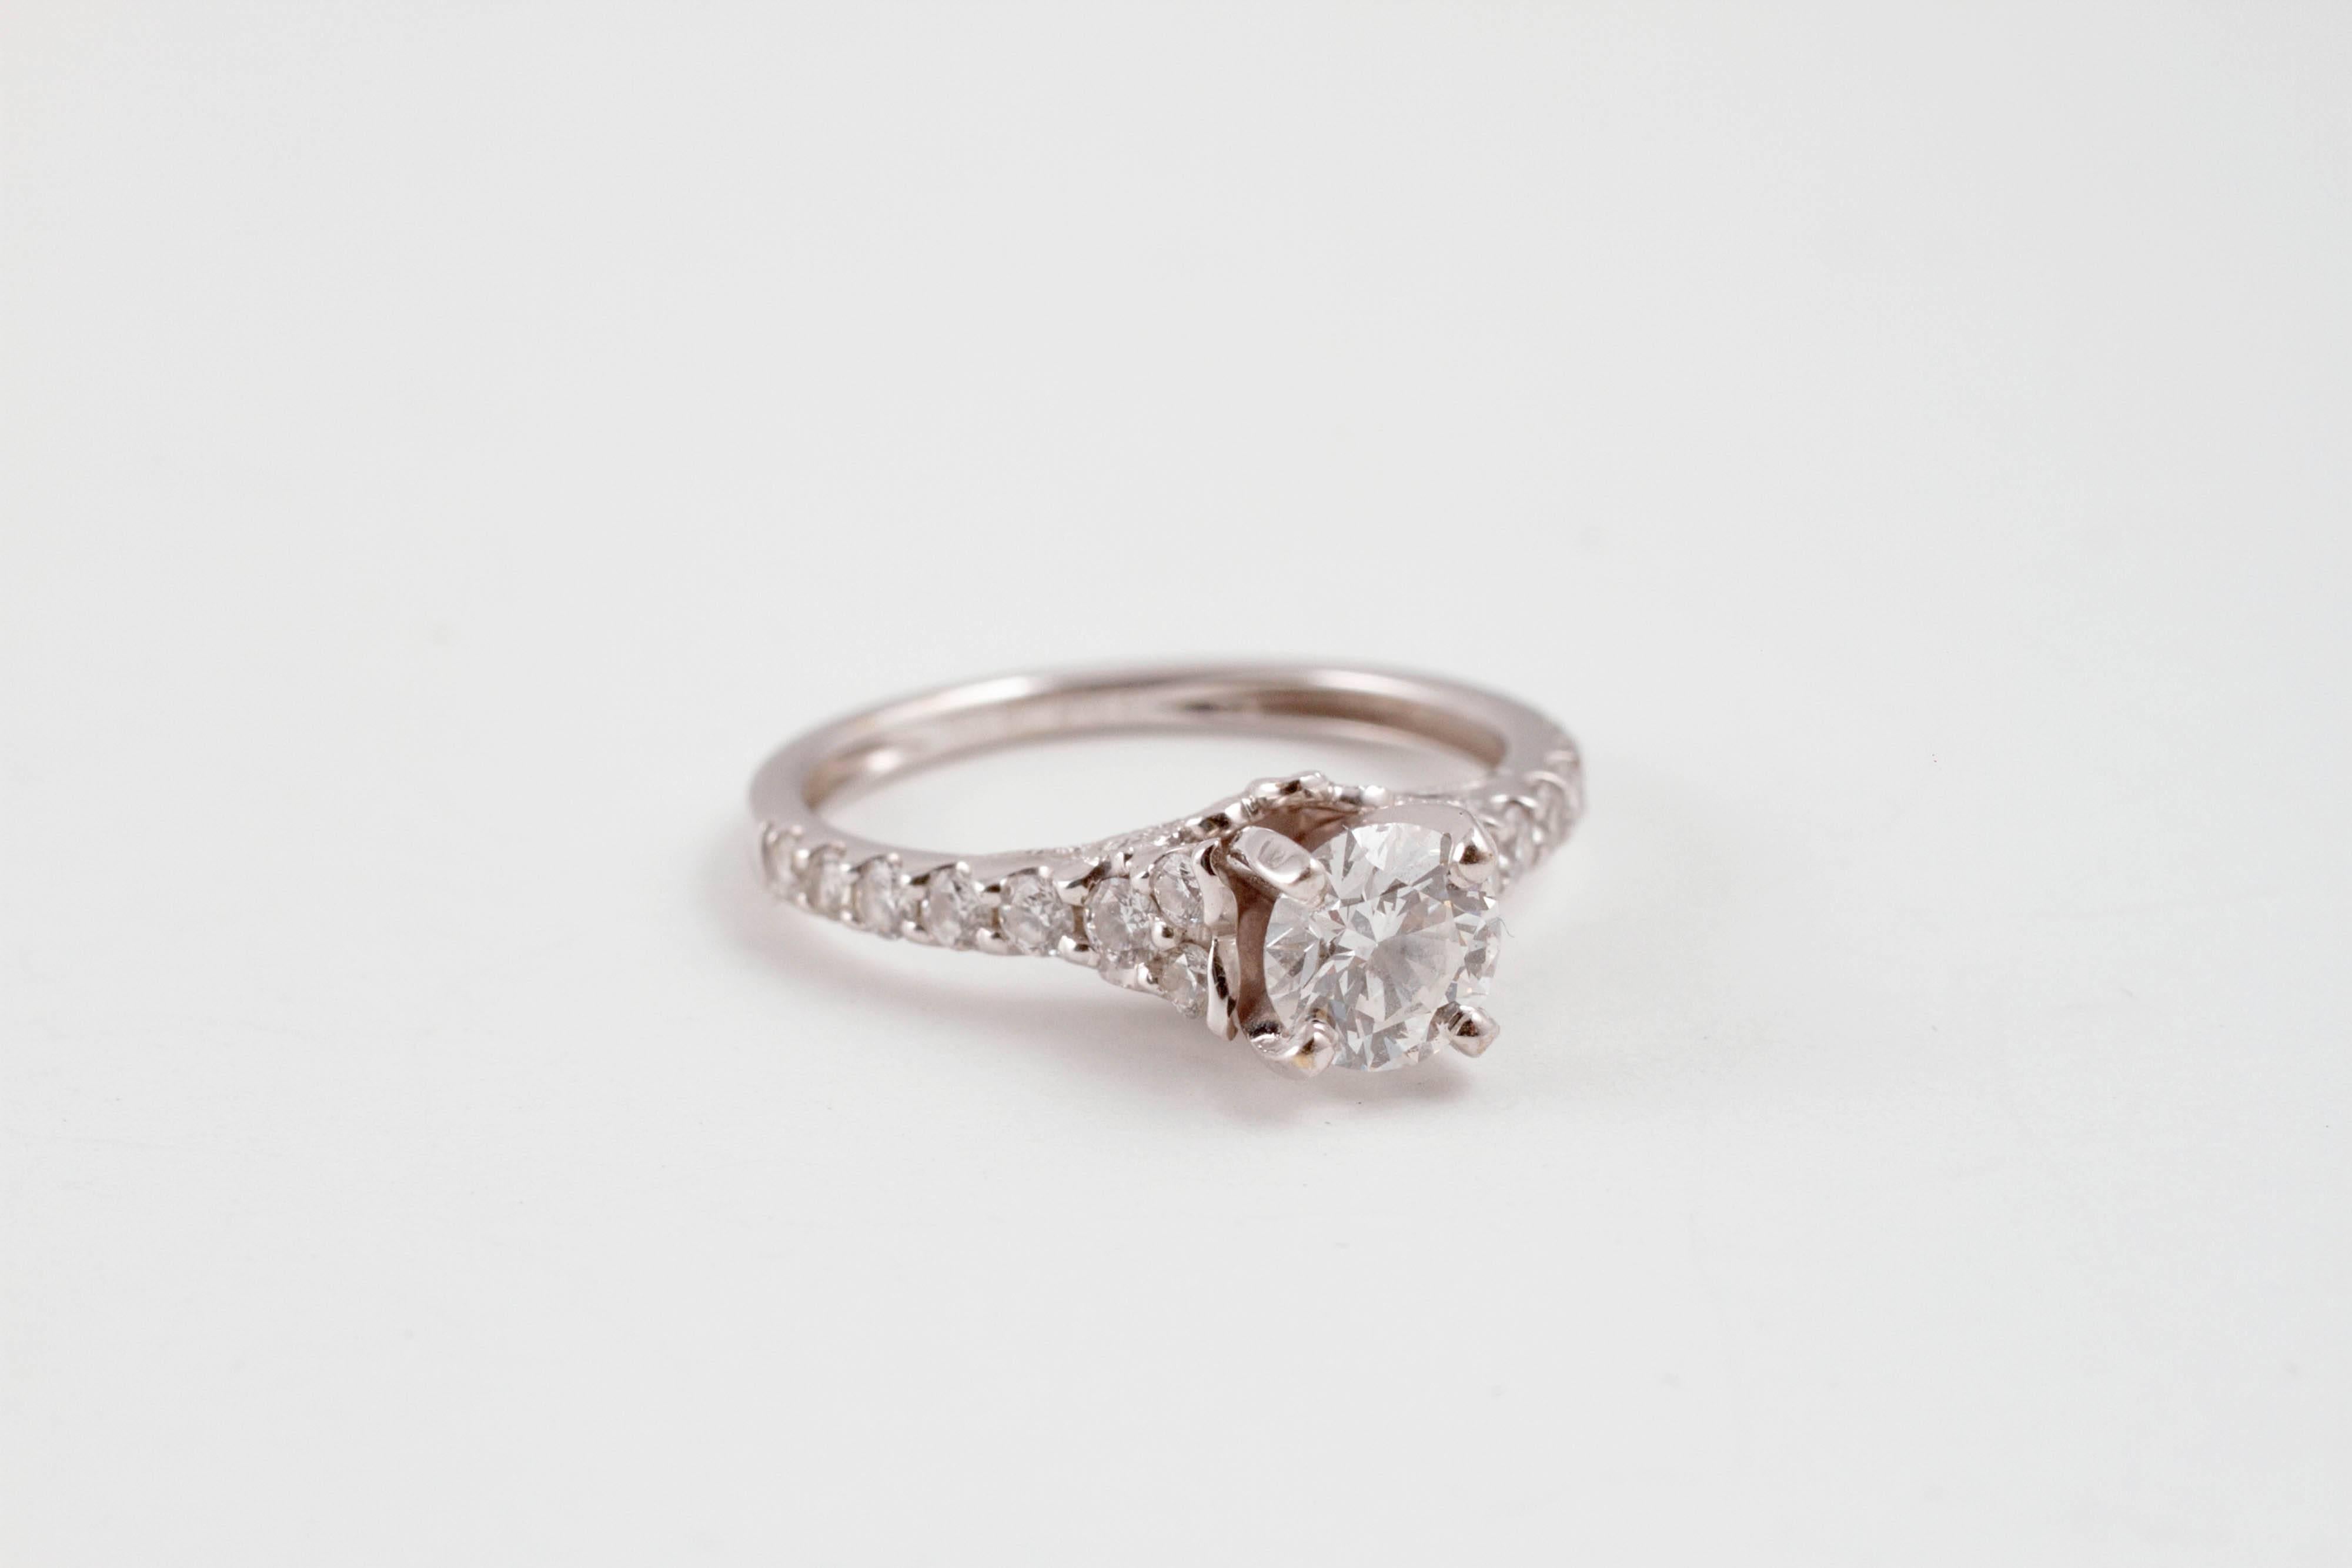 Women's White Gold Diamond Engagement Ring GIA Certified 0.61 Carat Center